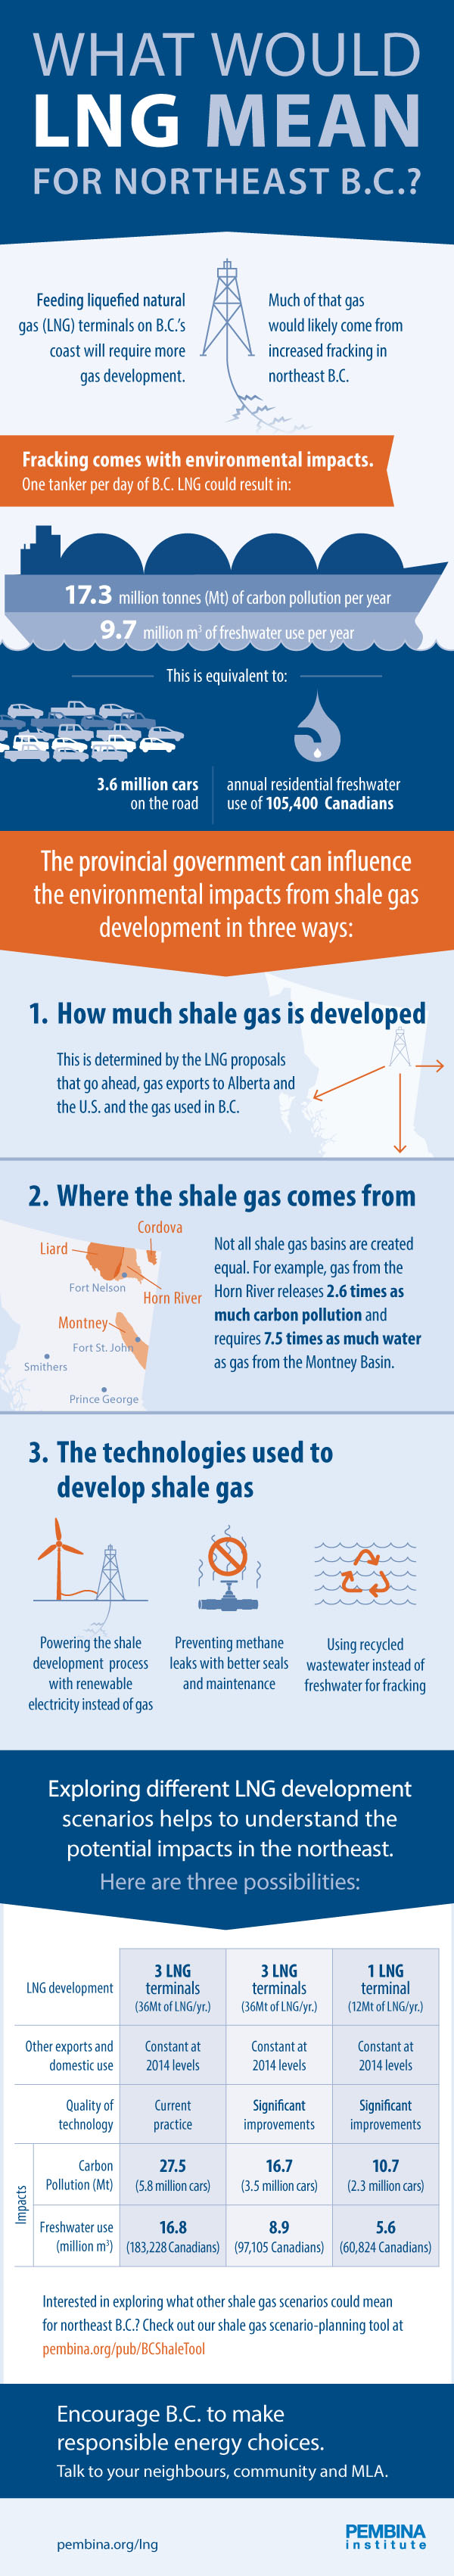 Pembina-LNG-fracking-infographic